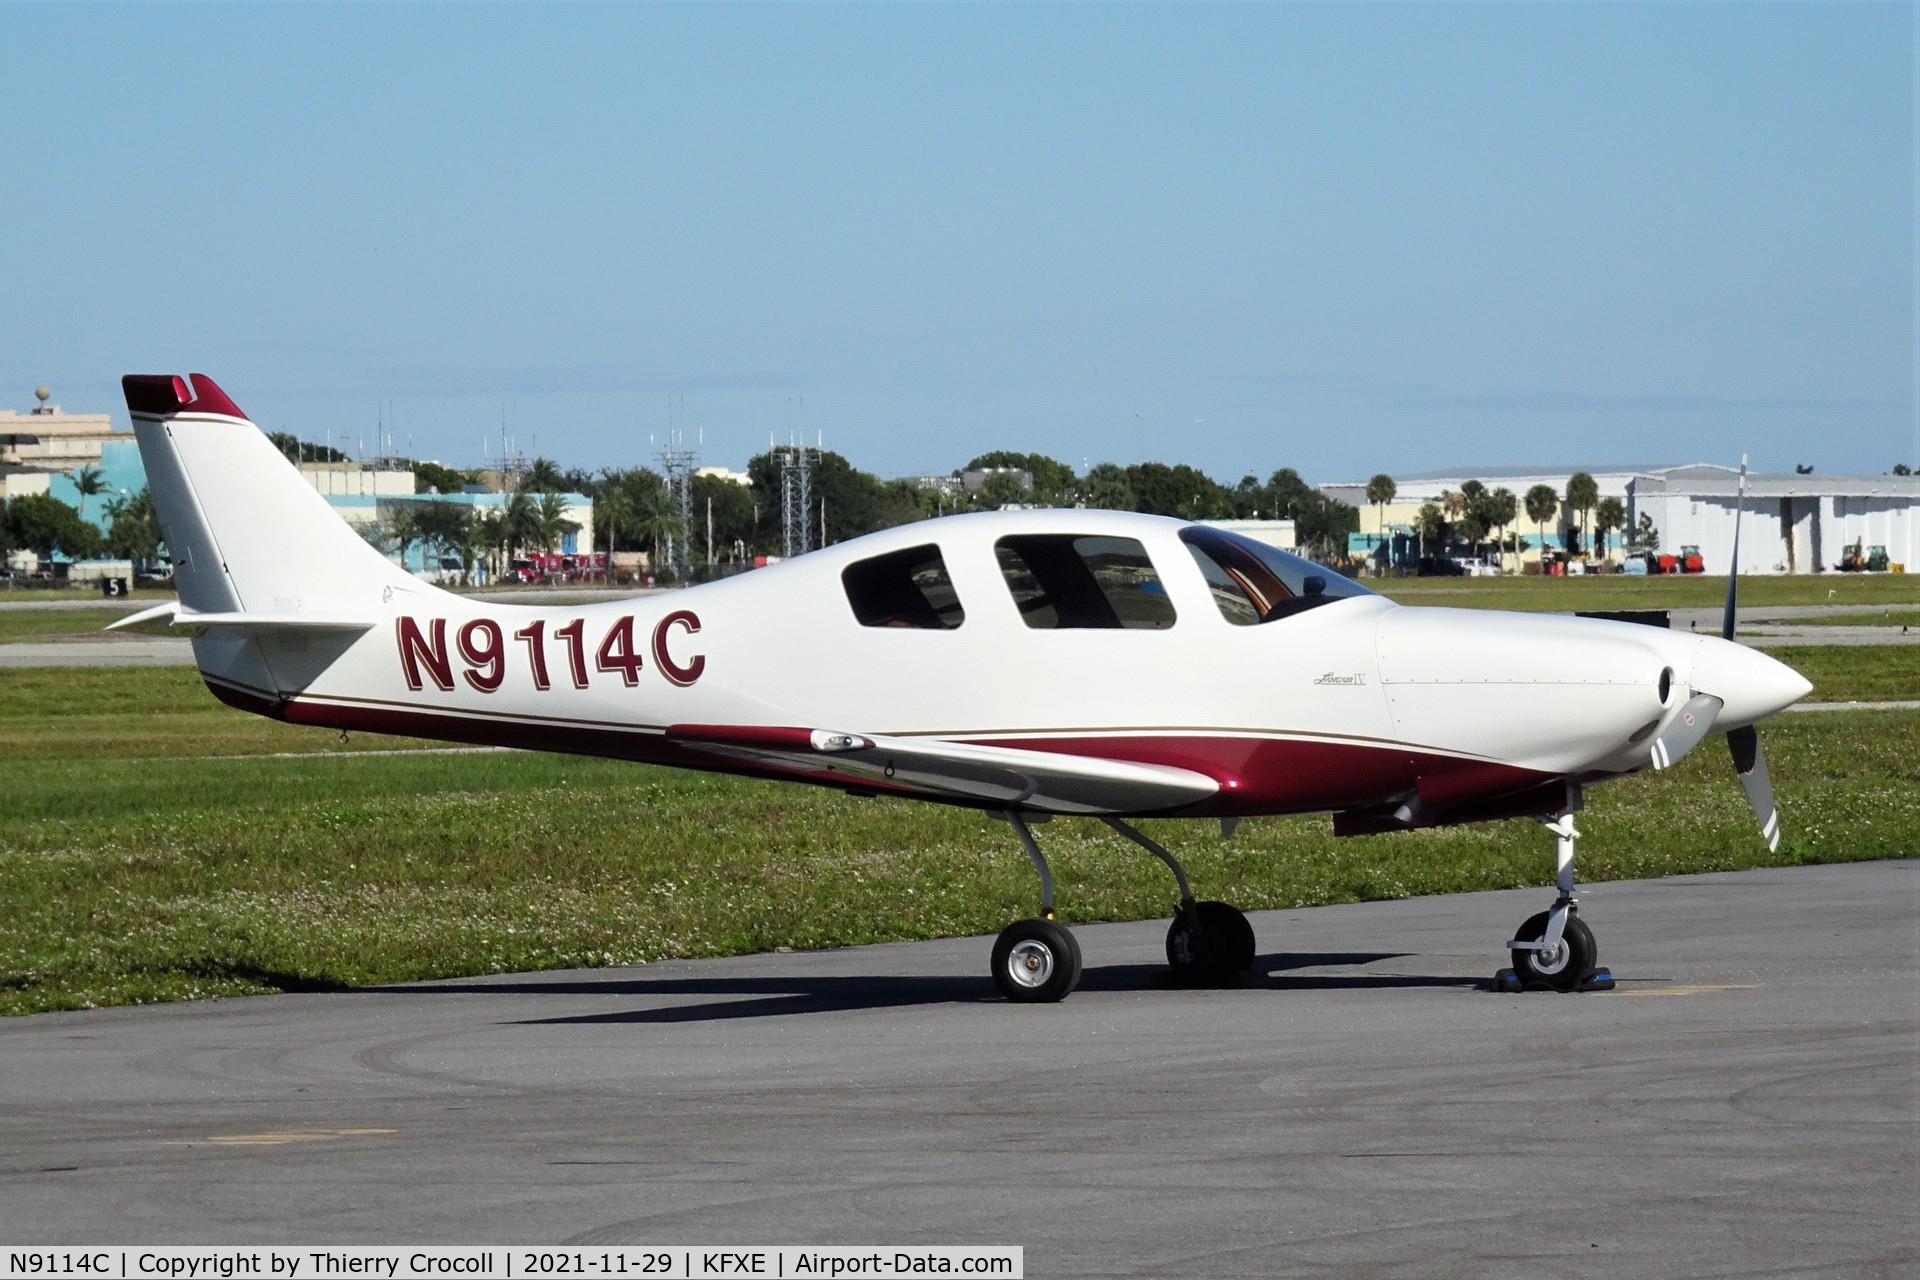 N9114C, 1996 Lancair IV C/N LIV-222, Parked at Fort Lauderdale Executive Airport